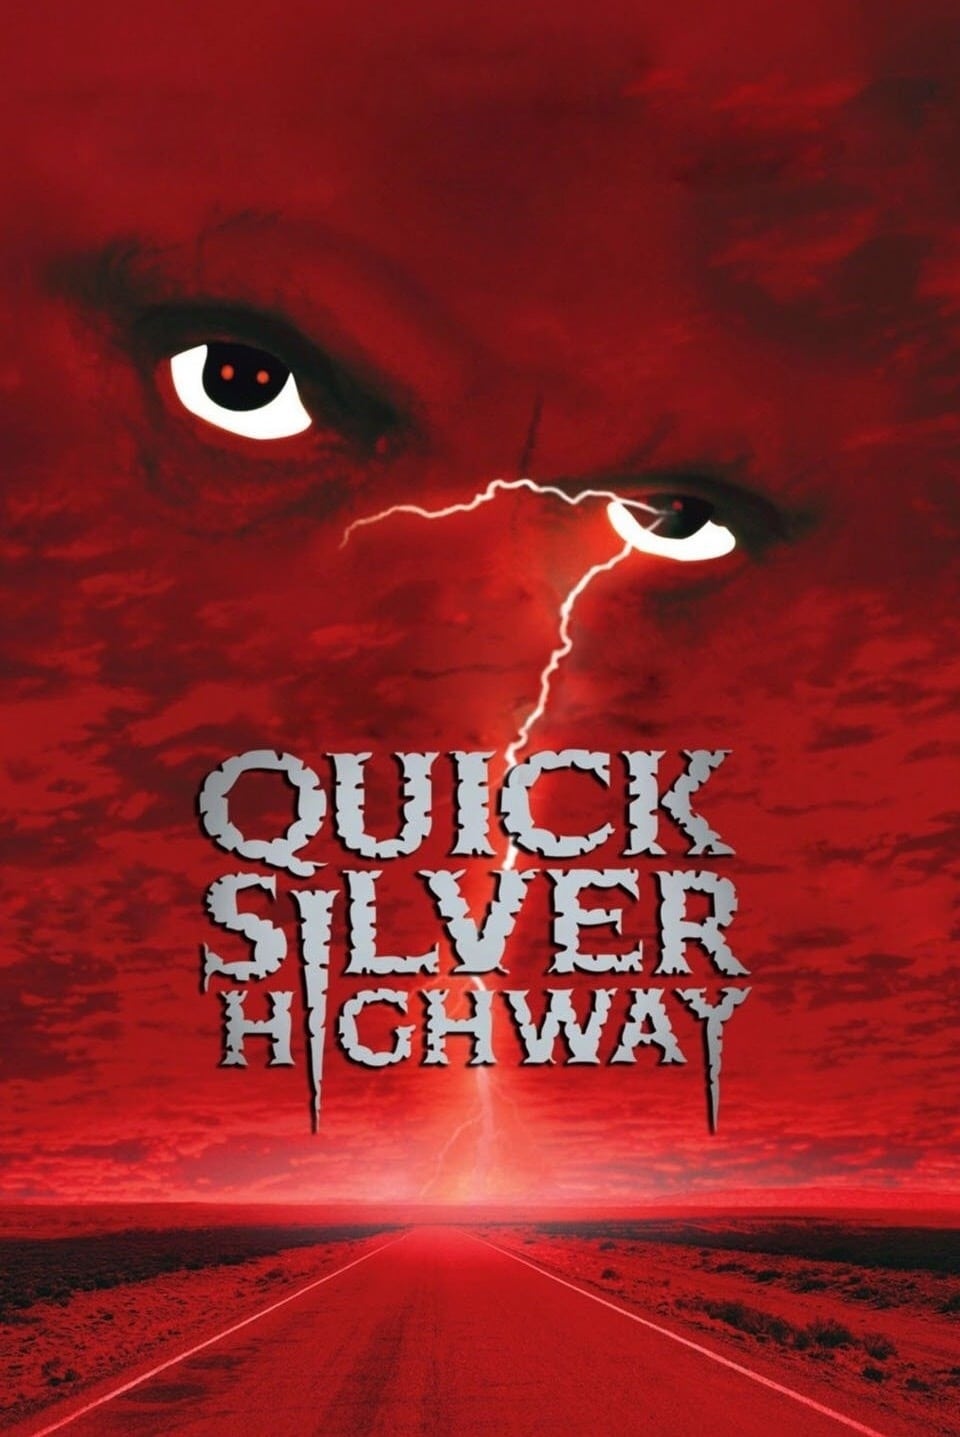 Quicksilver Highway (1997)